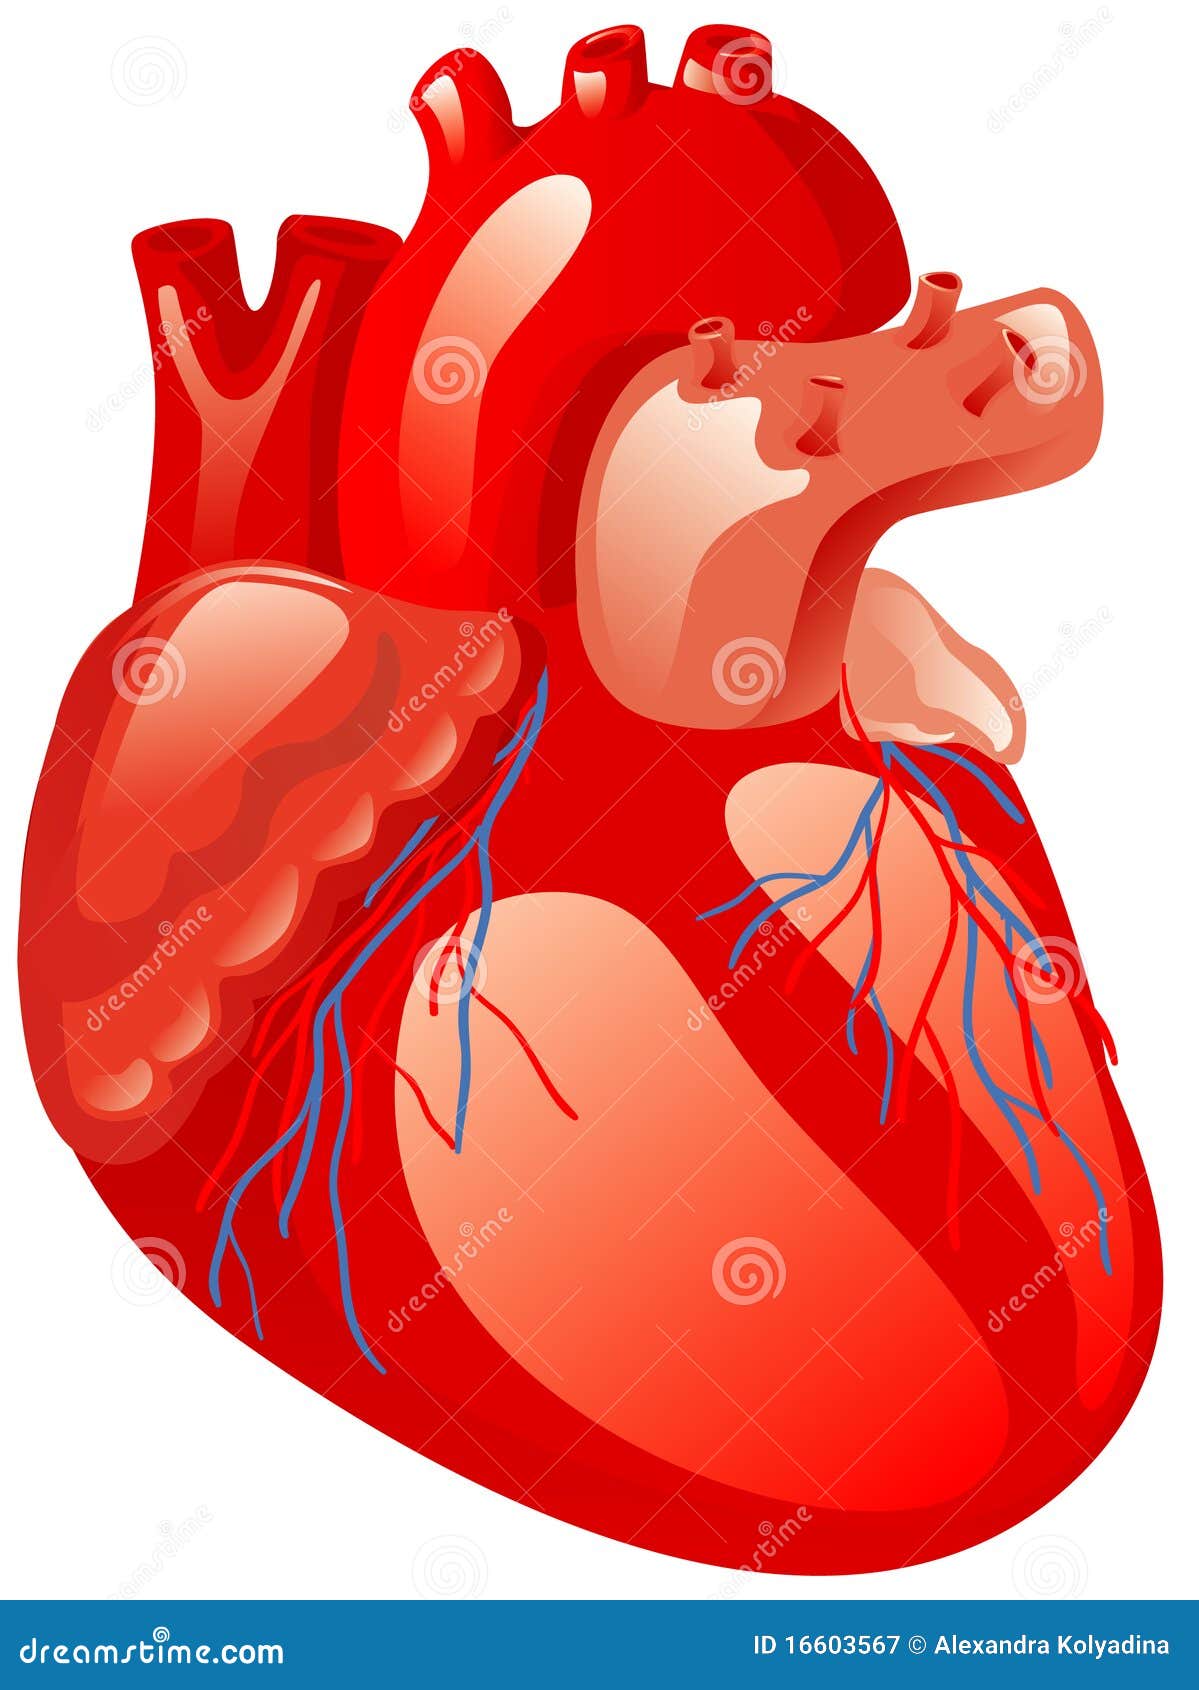 clipart human heart - photo #15